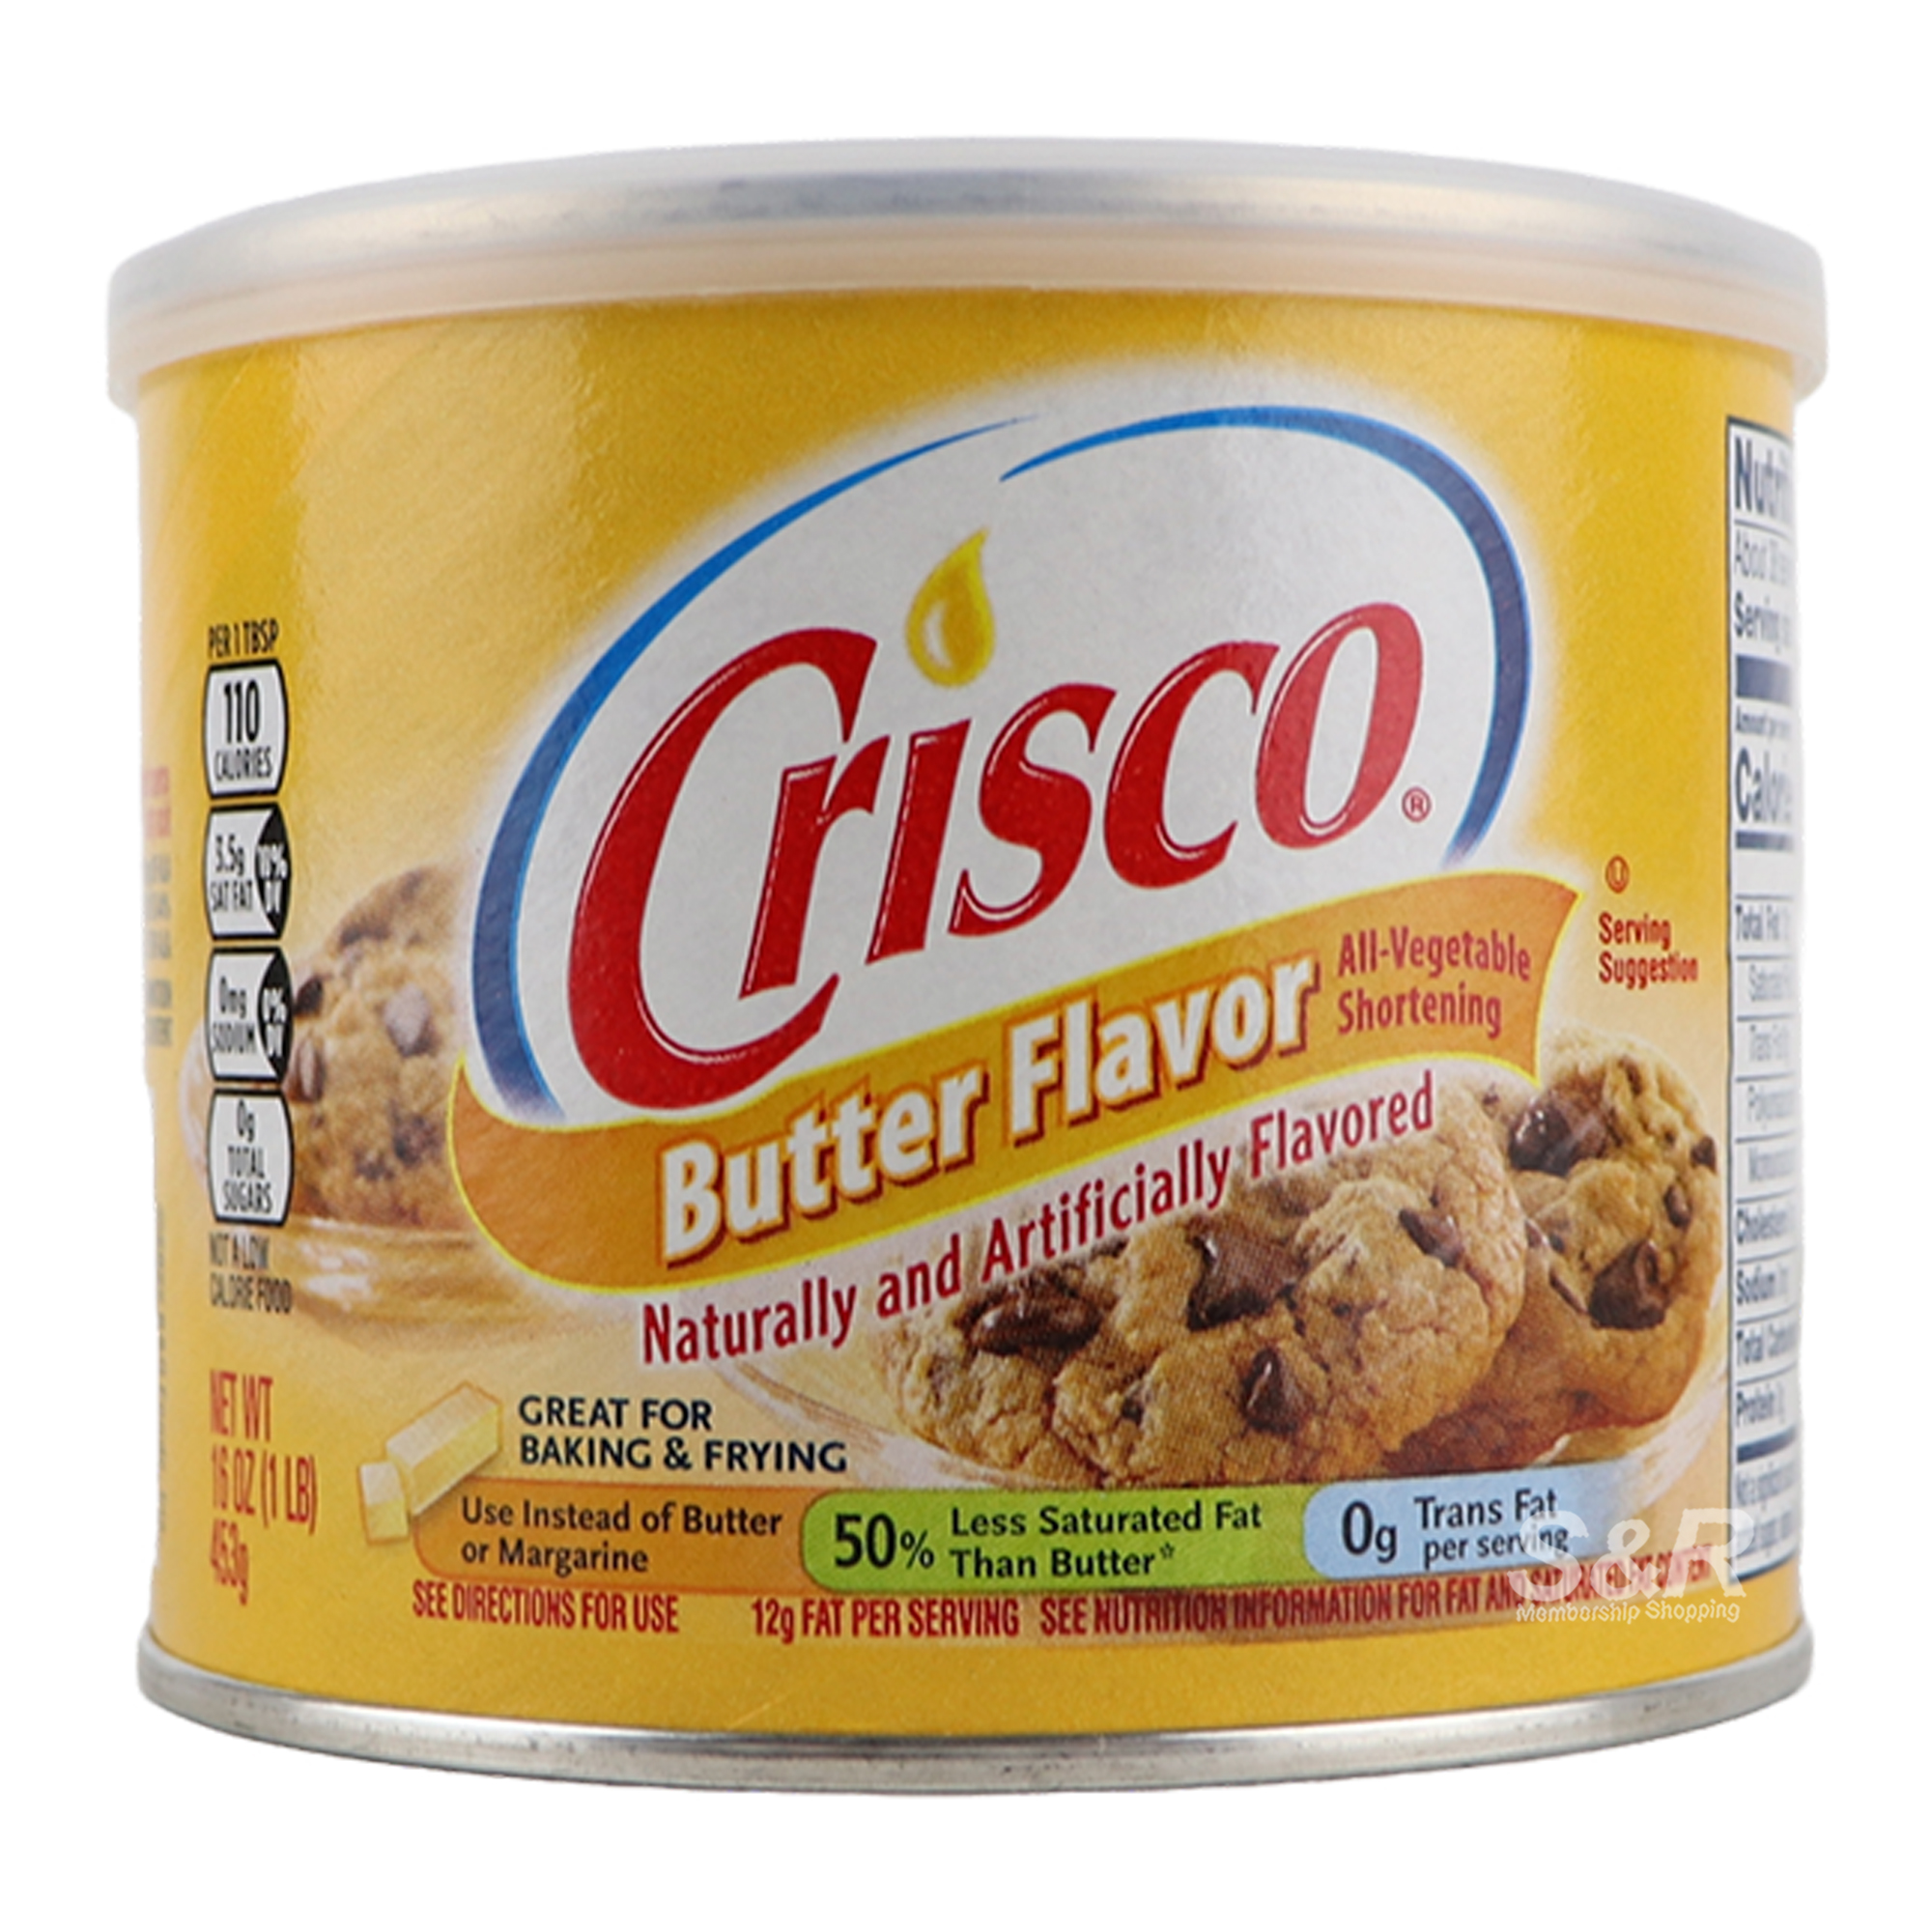 Crisco Butter Flavor All-Vegetable Shortening 453g